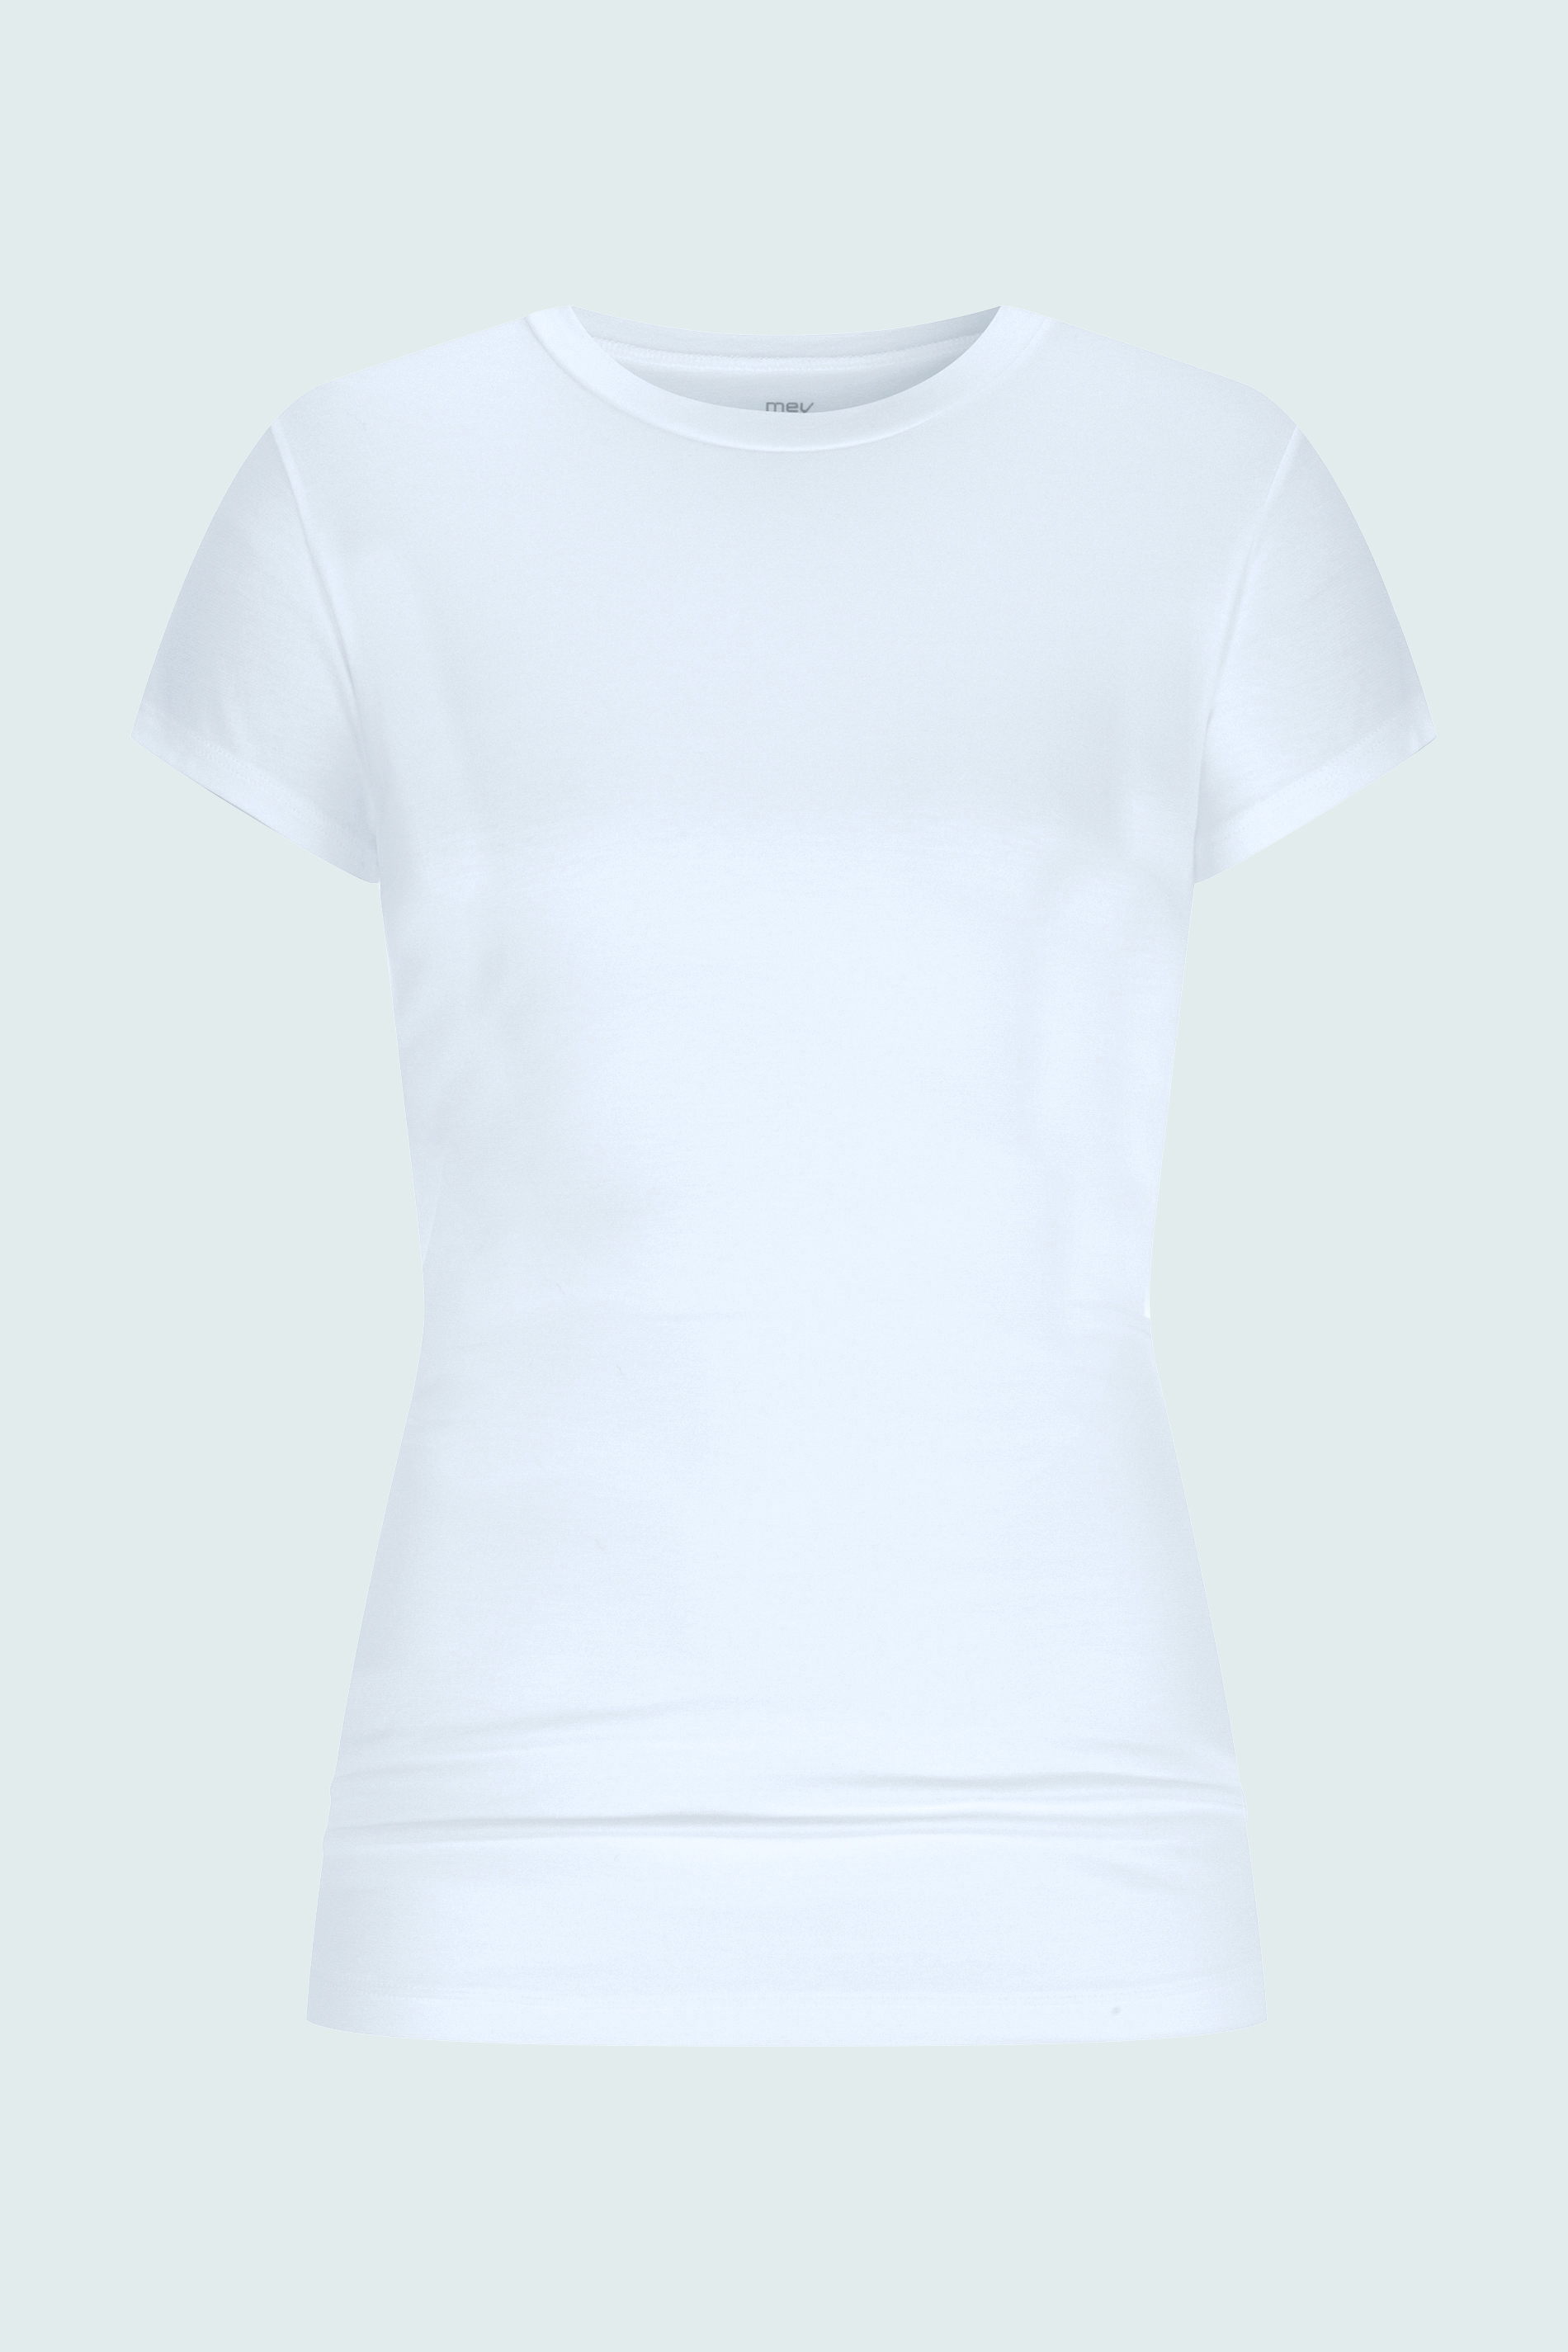 T-Shirt White Serie Cotton Pure Cut Out | mey®